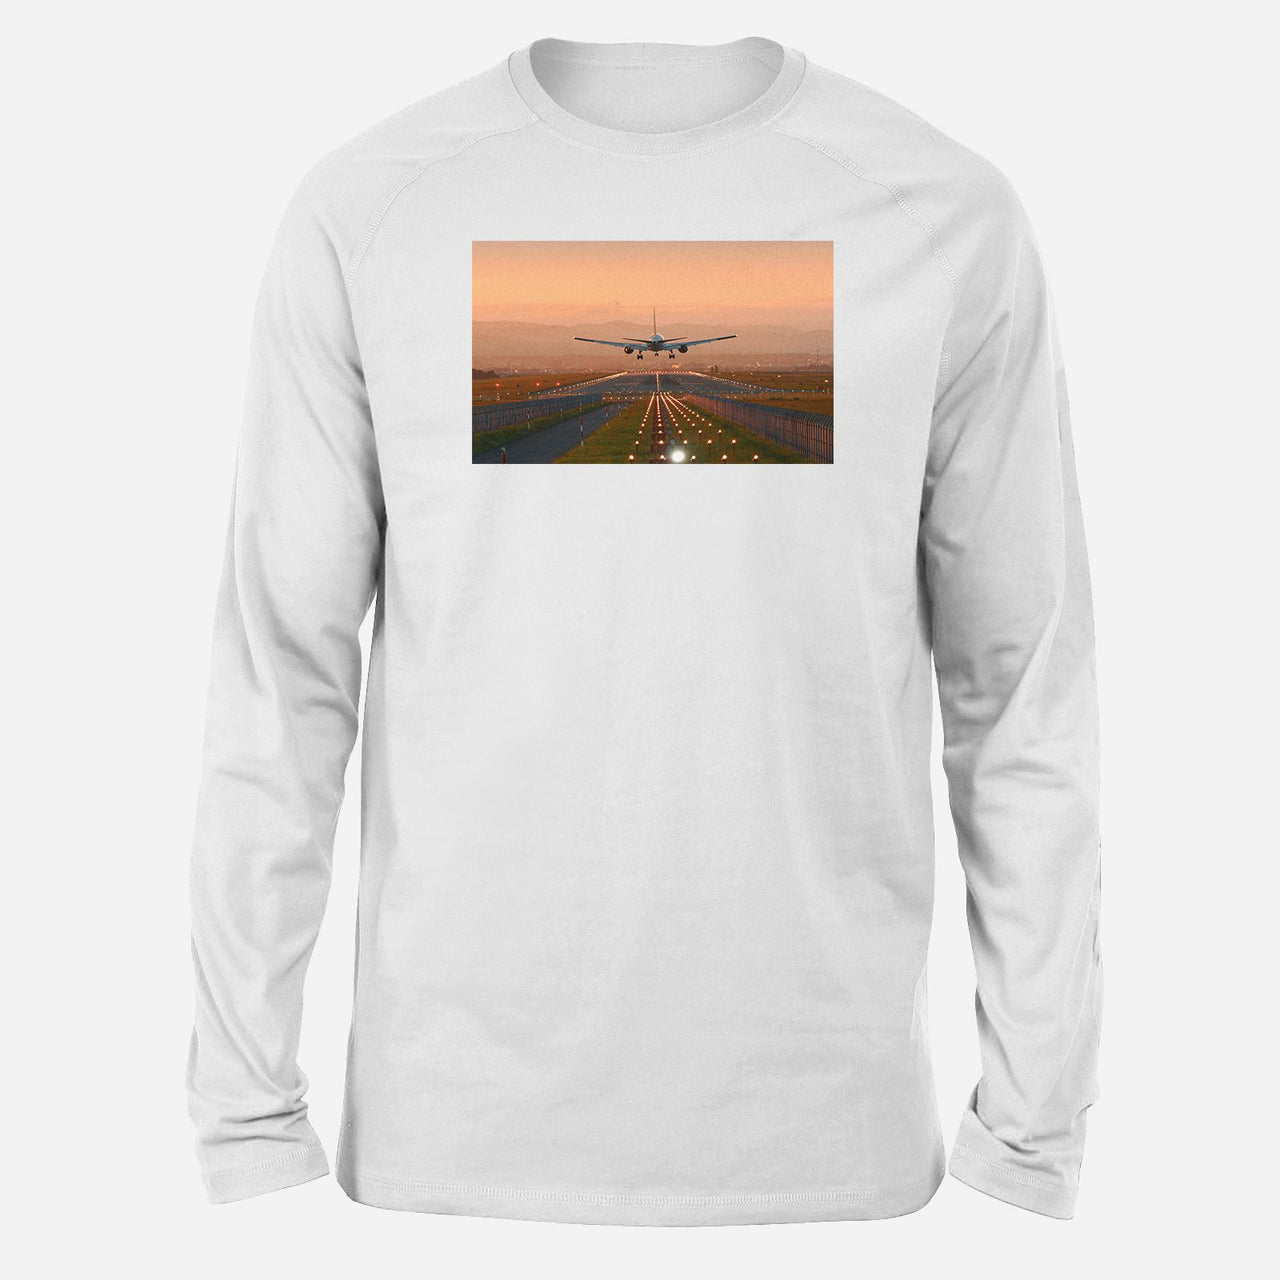 Super Cool Landing During Sunset Designed Long-Sleeve T-Shirts